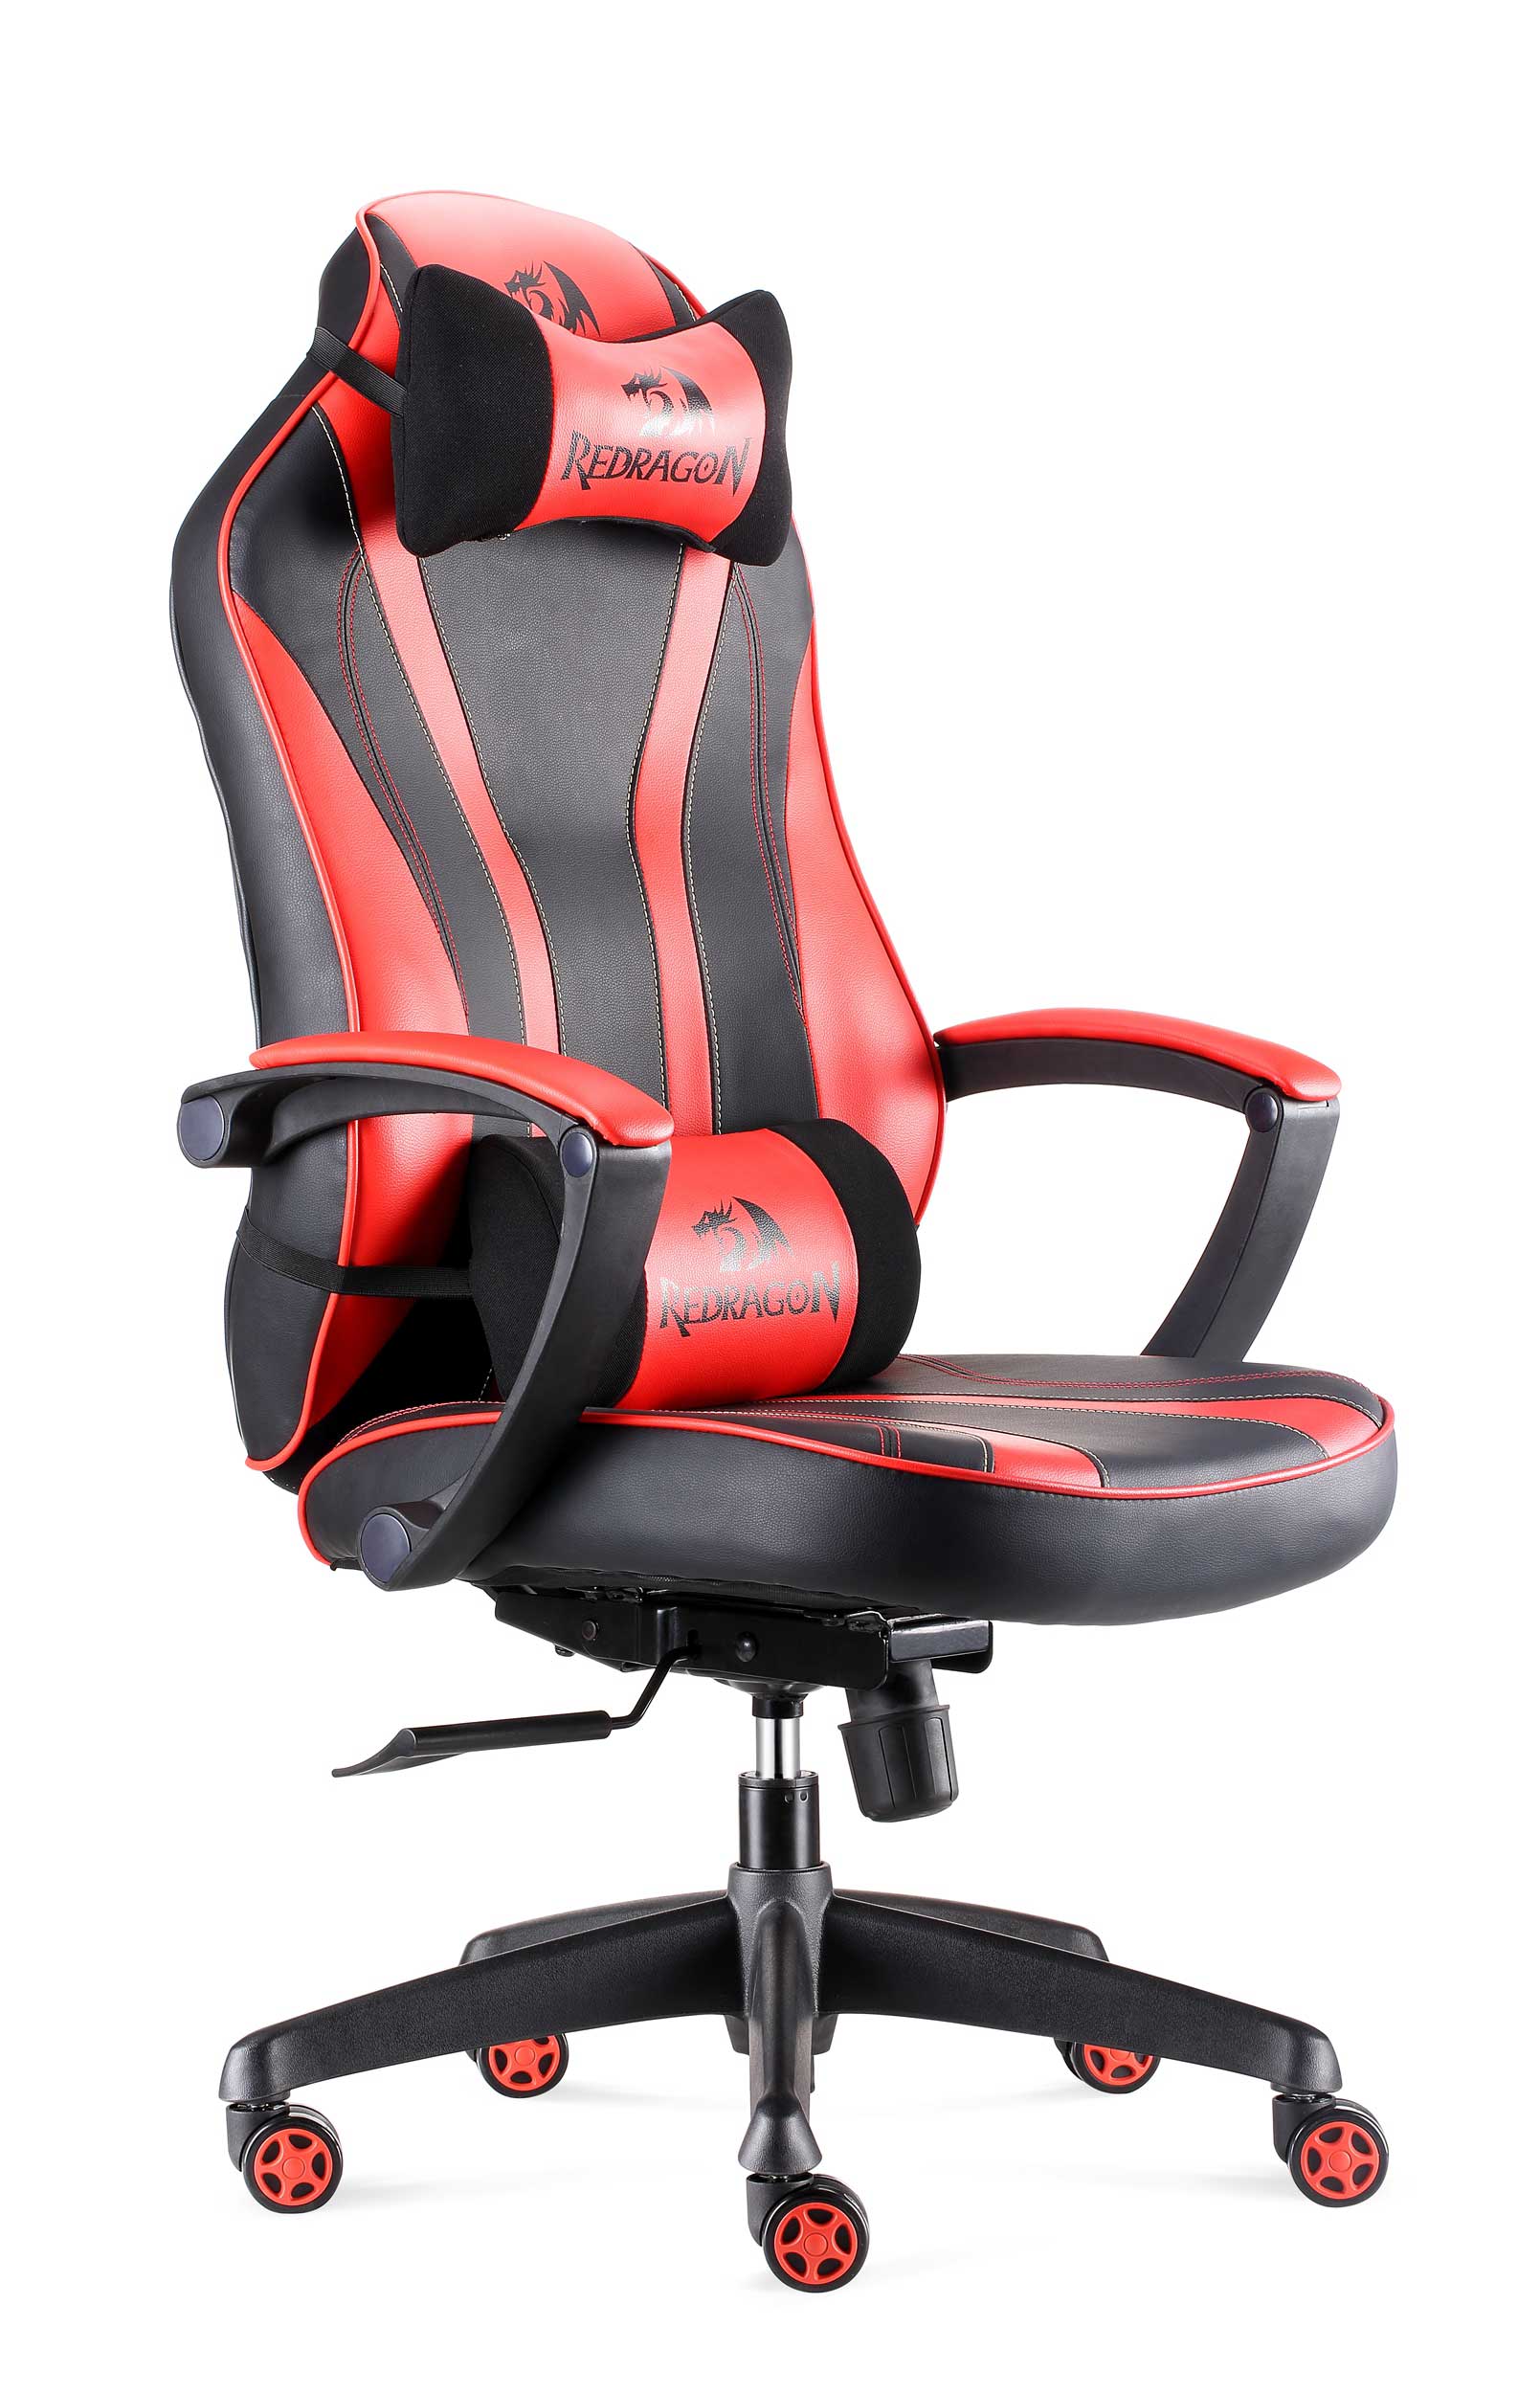 Redragon METIS C101 Gaming Chair Back/Red Price in